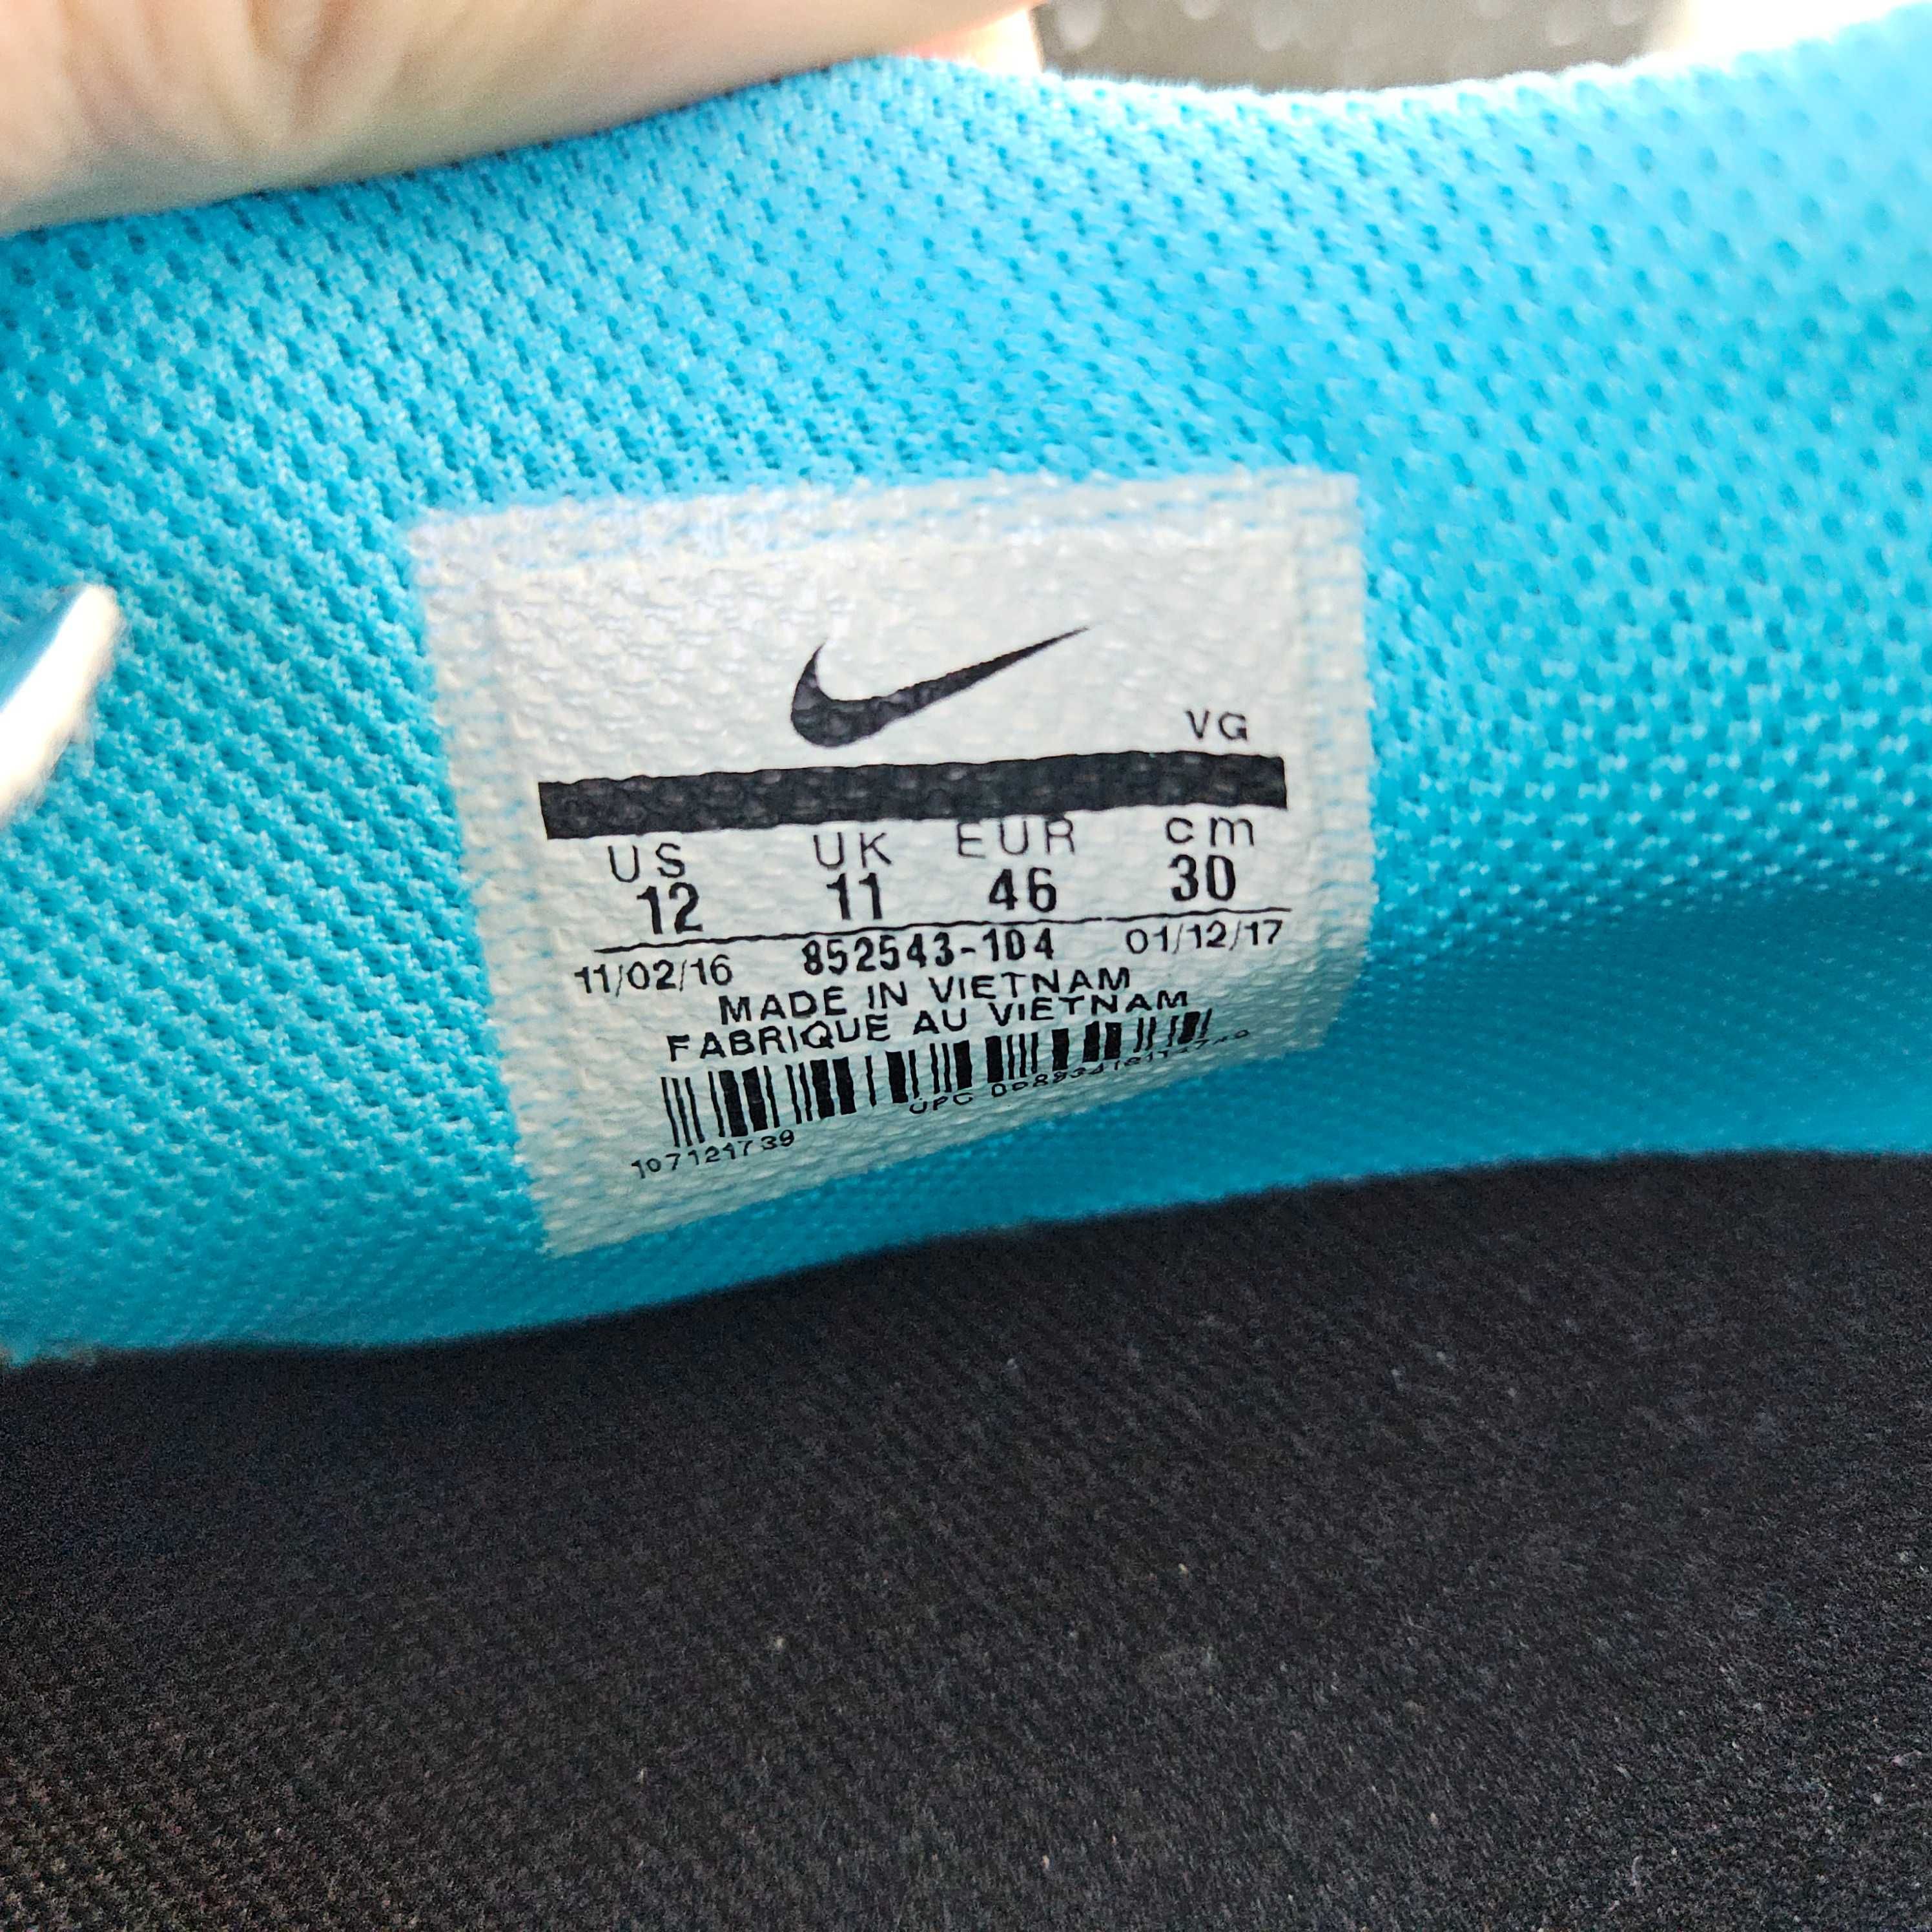 Футзалки Nike HypervenomX Phade III IC. Размер 46